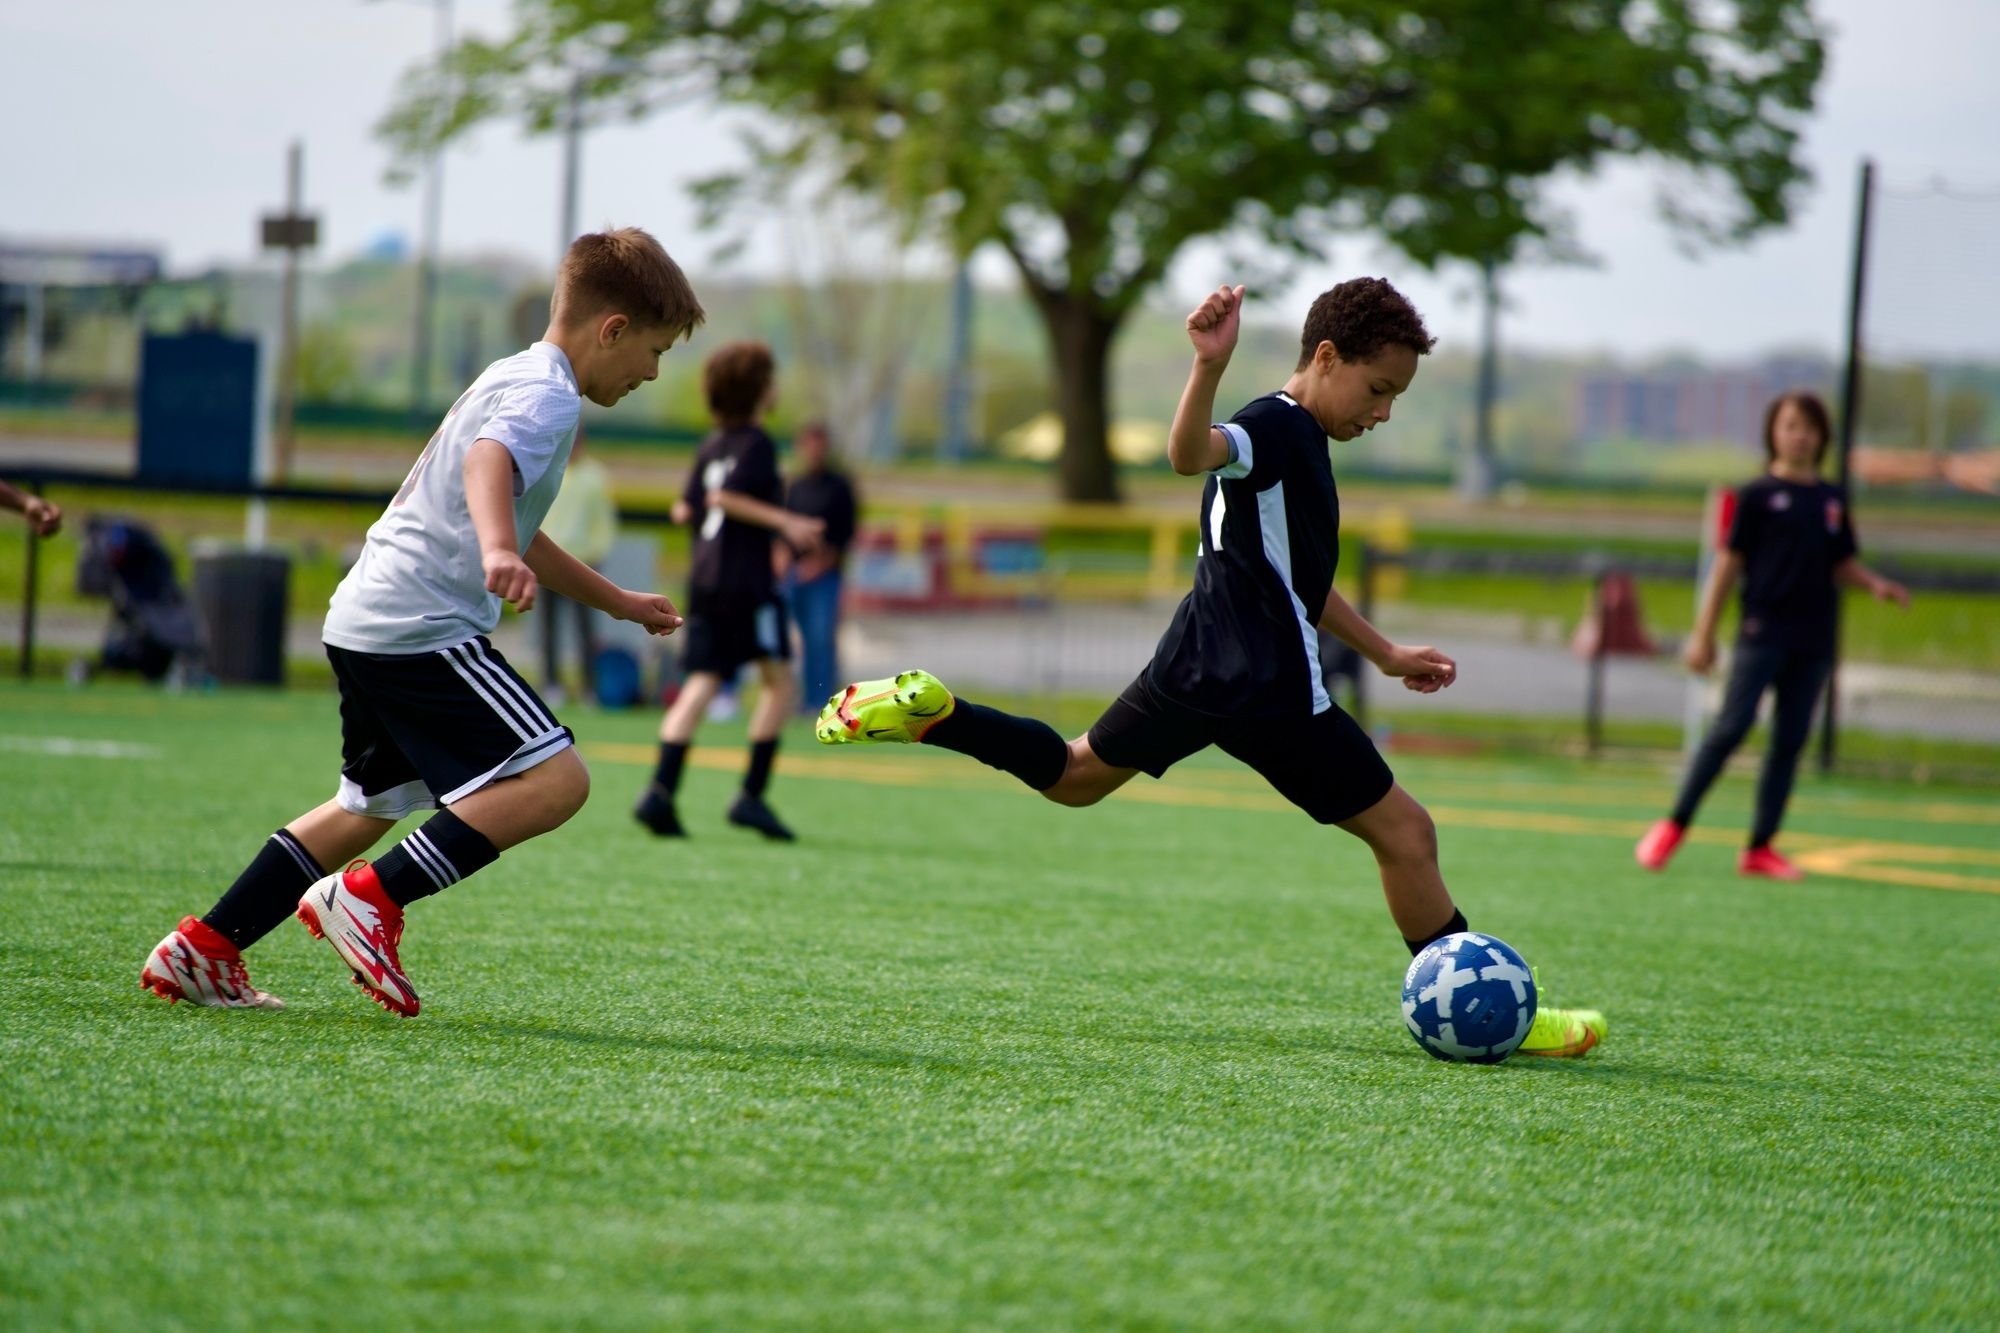 Dc-way-soccer-club-for-kids-in-washington-dc-9.jpeg